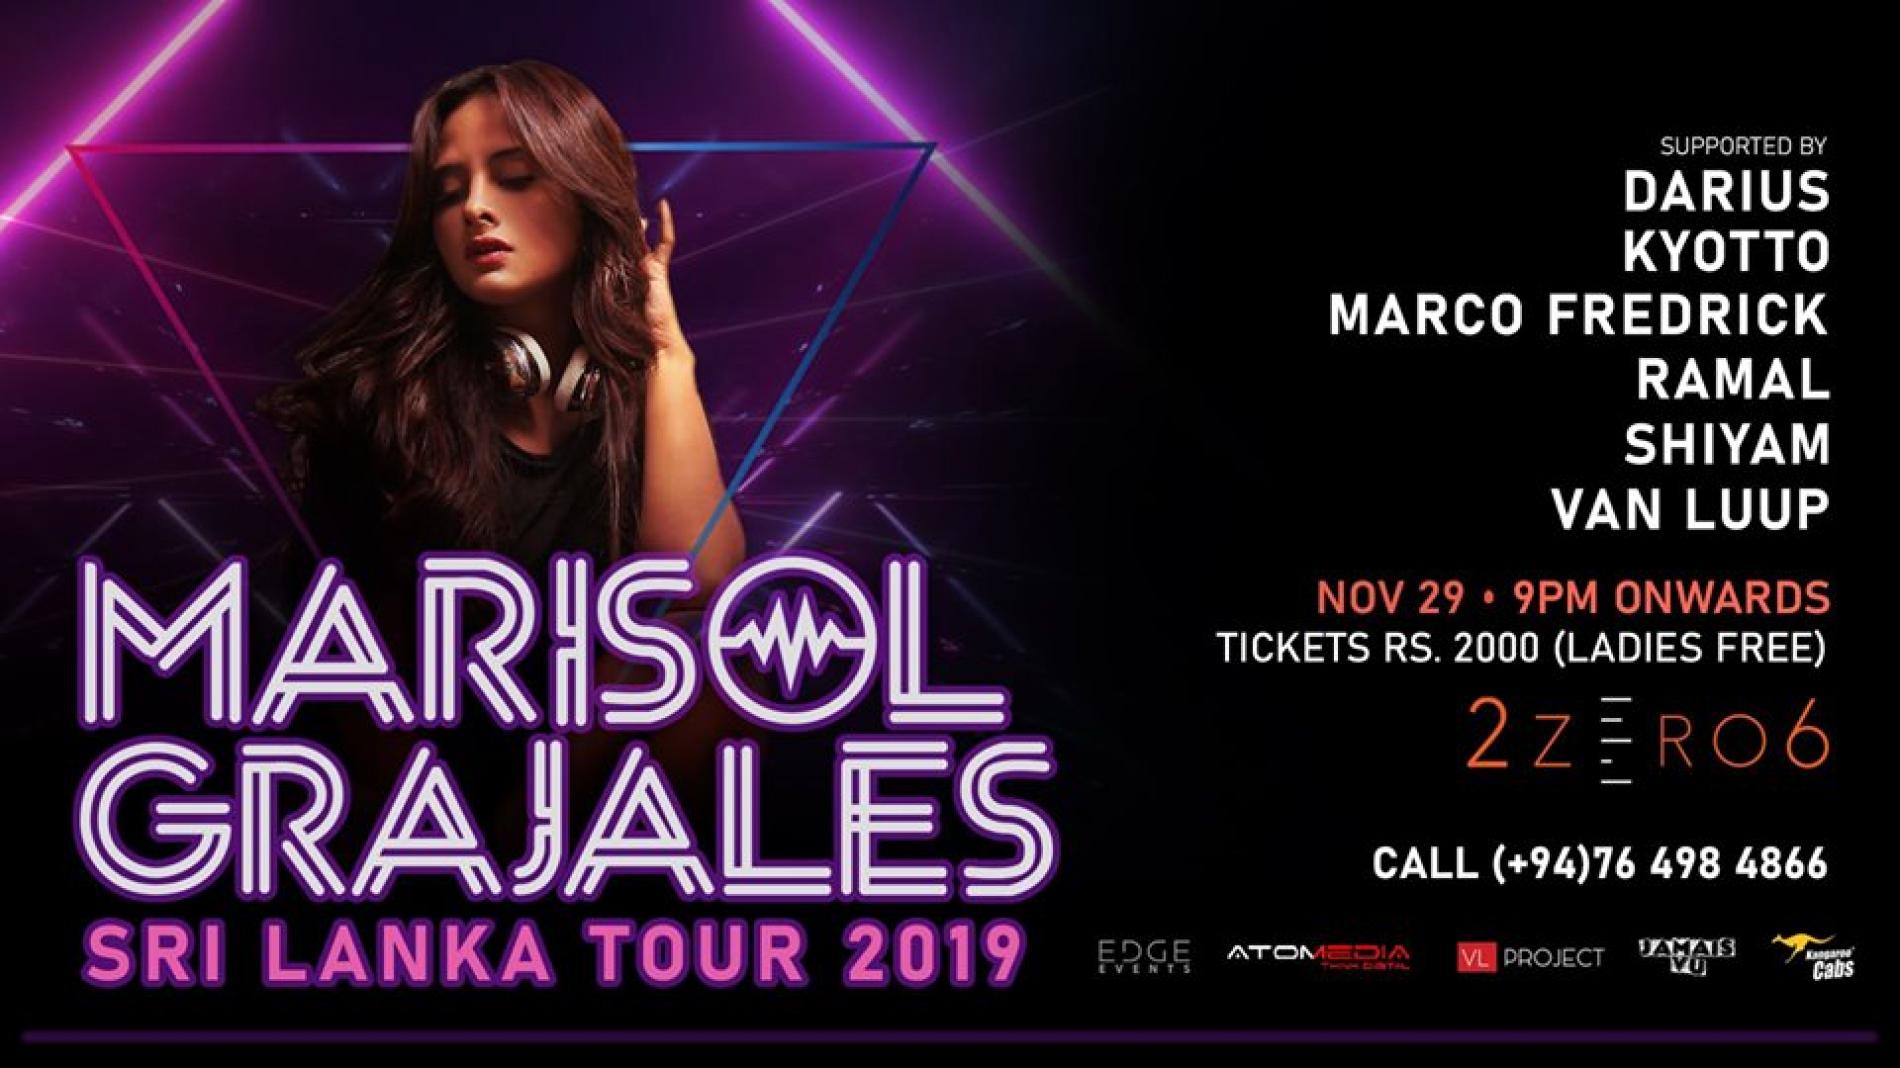 Marisol Grajales Sri Lanka Tour 2019 (Colombo)